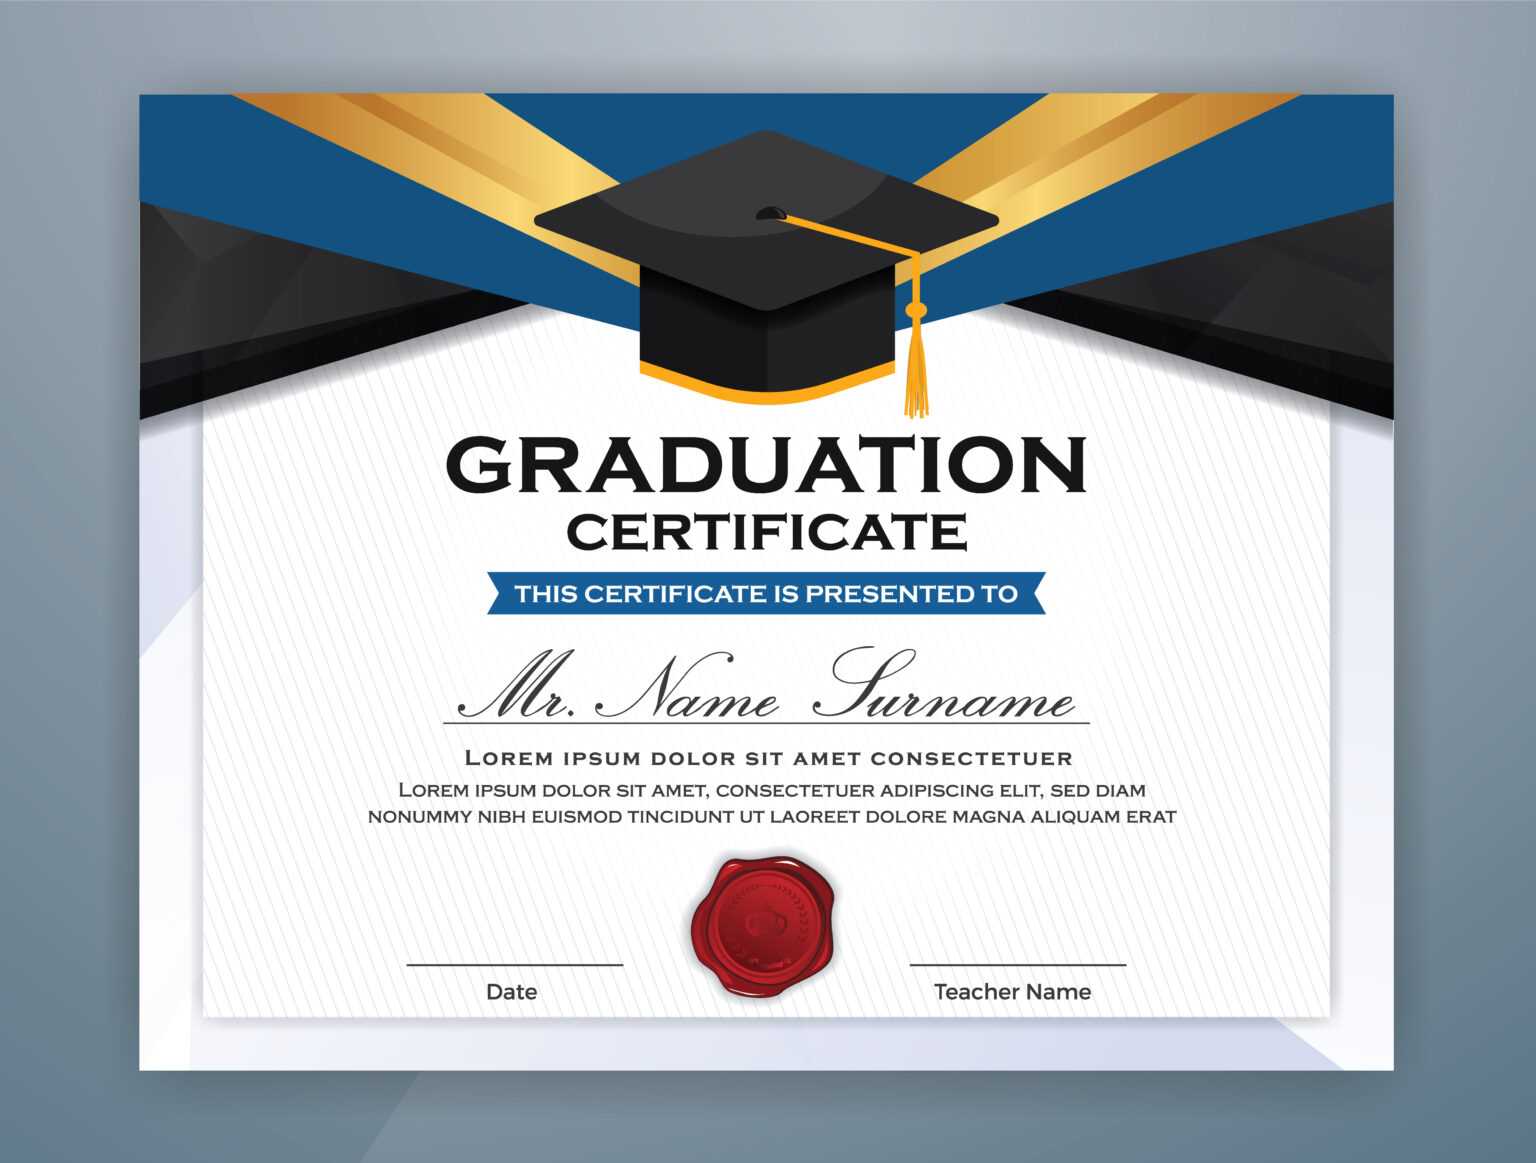 Graduation Certificate Free Vector Art (4 527 Free Downloads